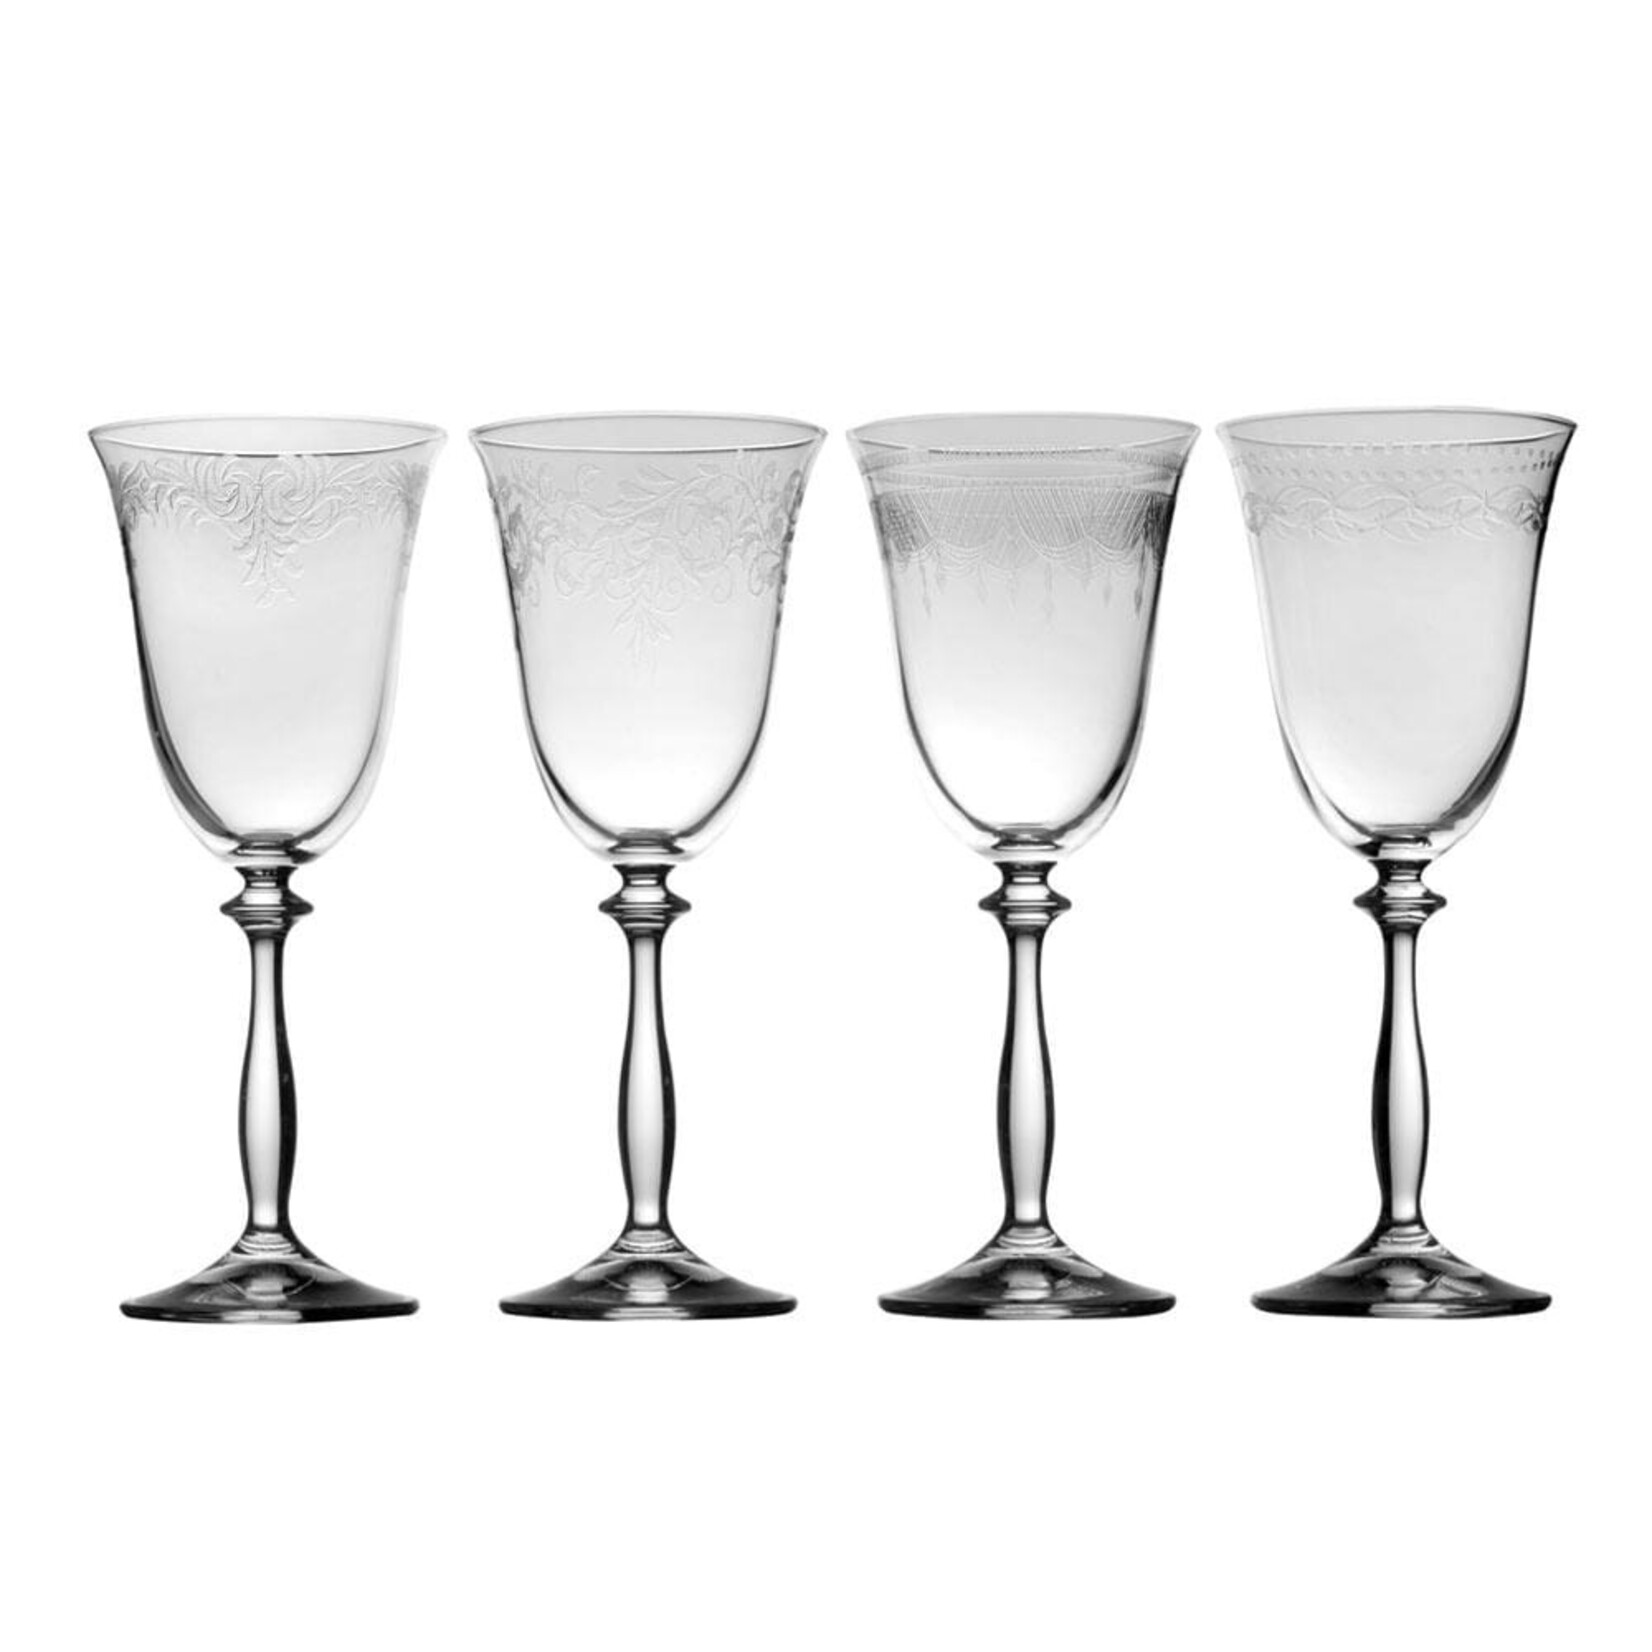 Amelia White Wine Glasses - Set of 4